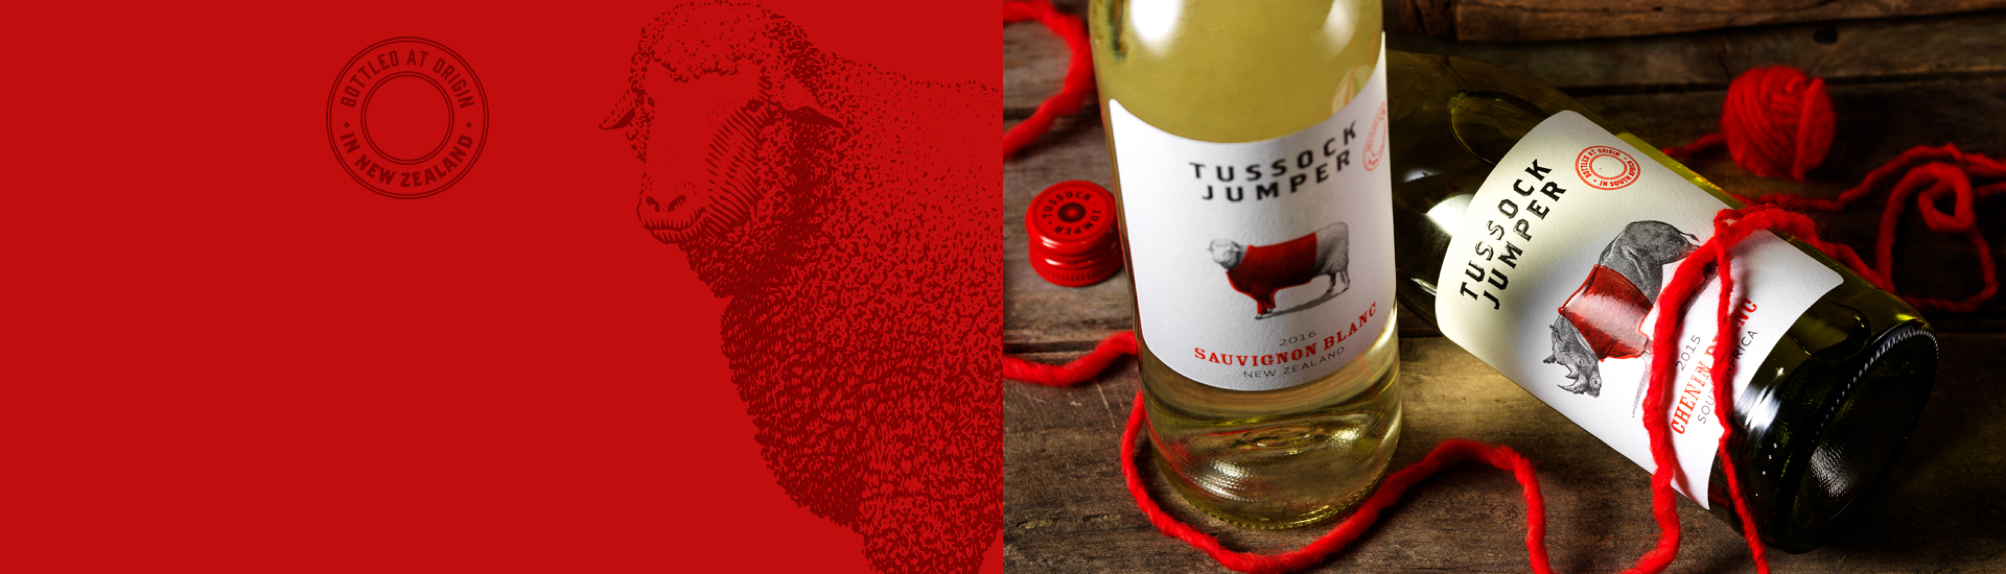 Tussock Jumper Wines - New Zealand - Sauvignon Blanc